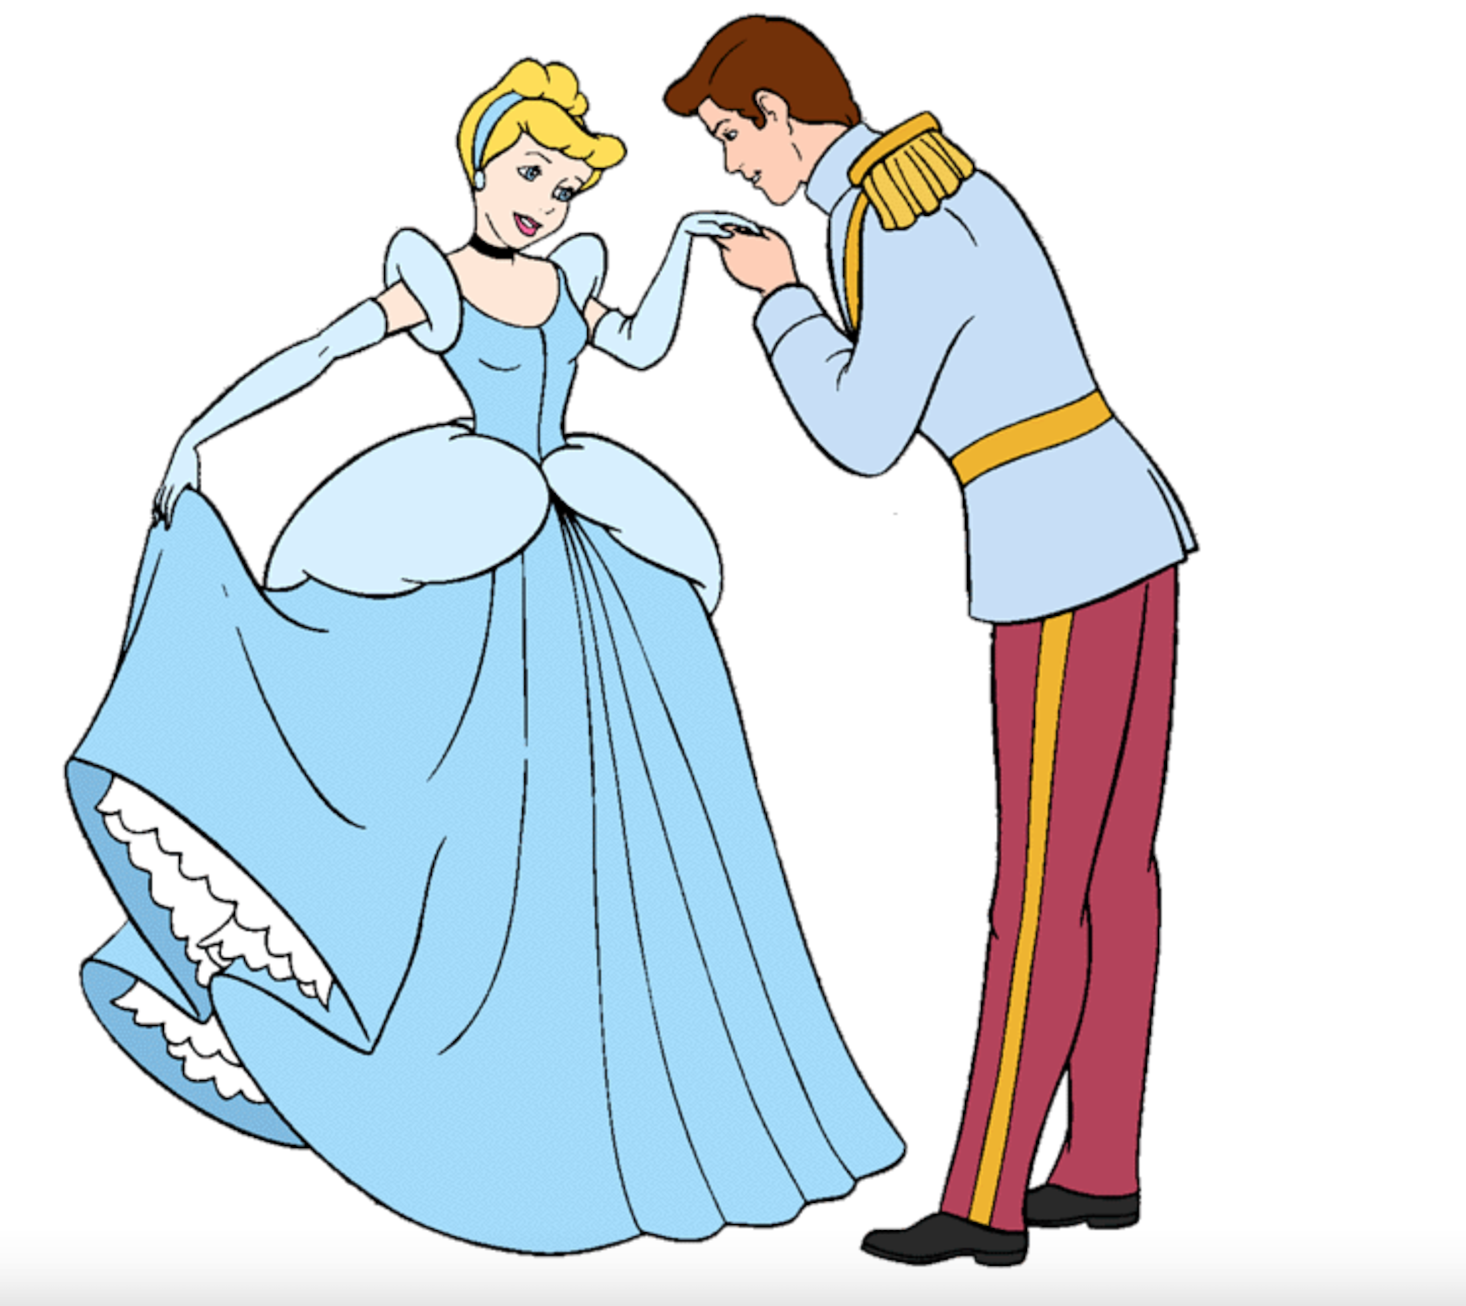 Золушка 1950 принц. Принцесса Золушка и принц. Золушка и принц Дисней. Принс Золушки.